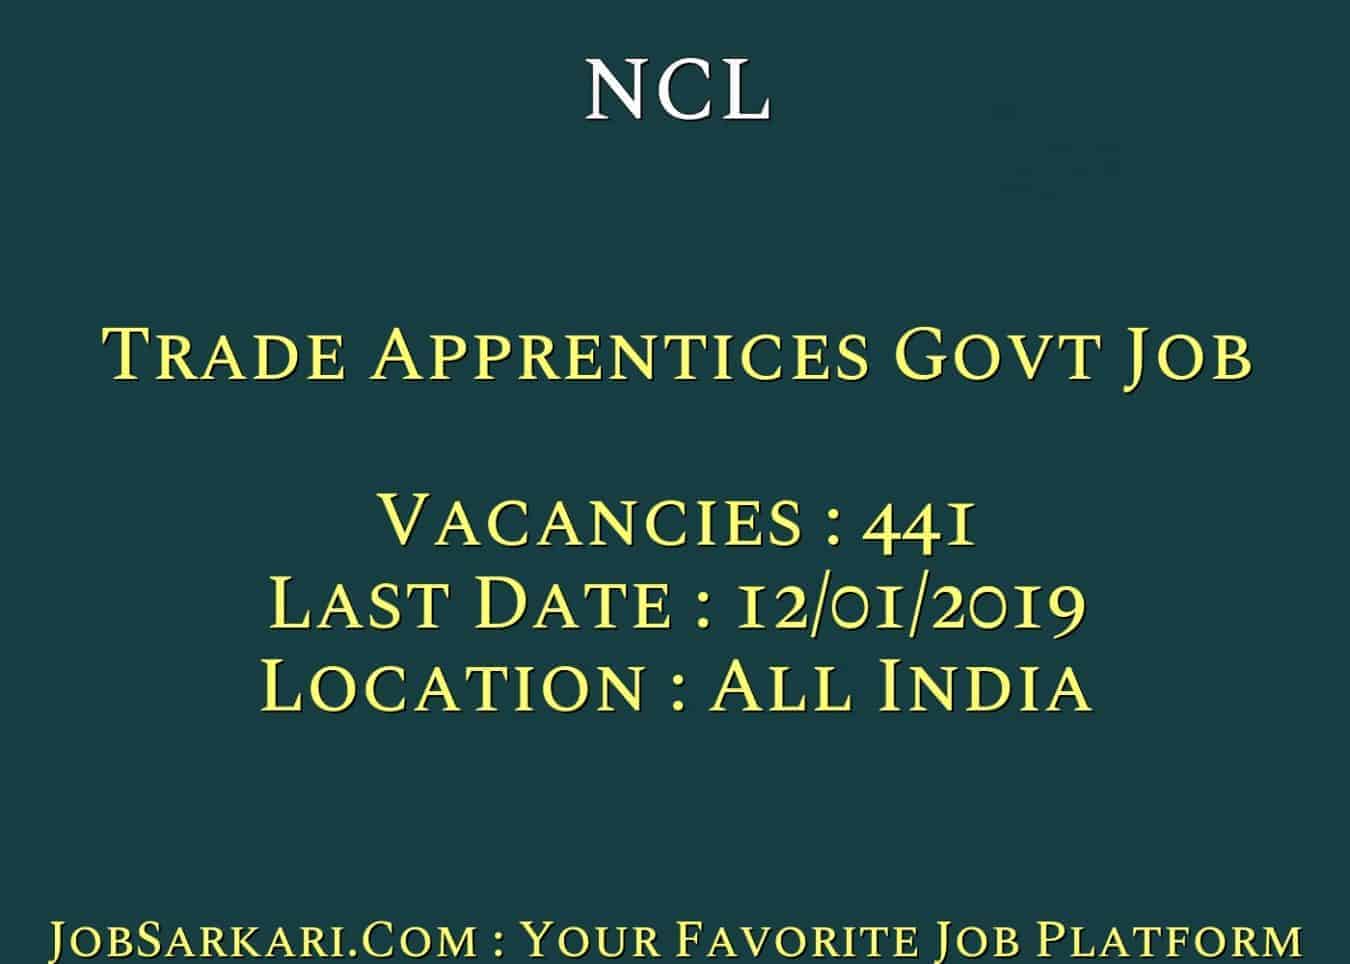 NCL Recruitment 2018 For Trade Apprentices Govt Job